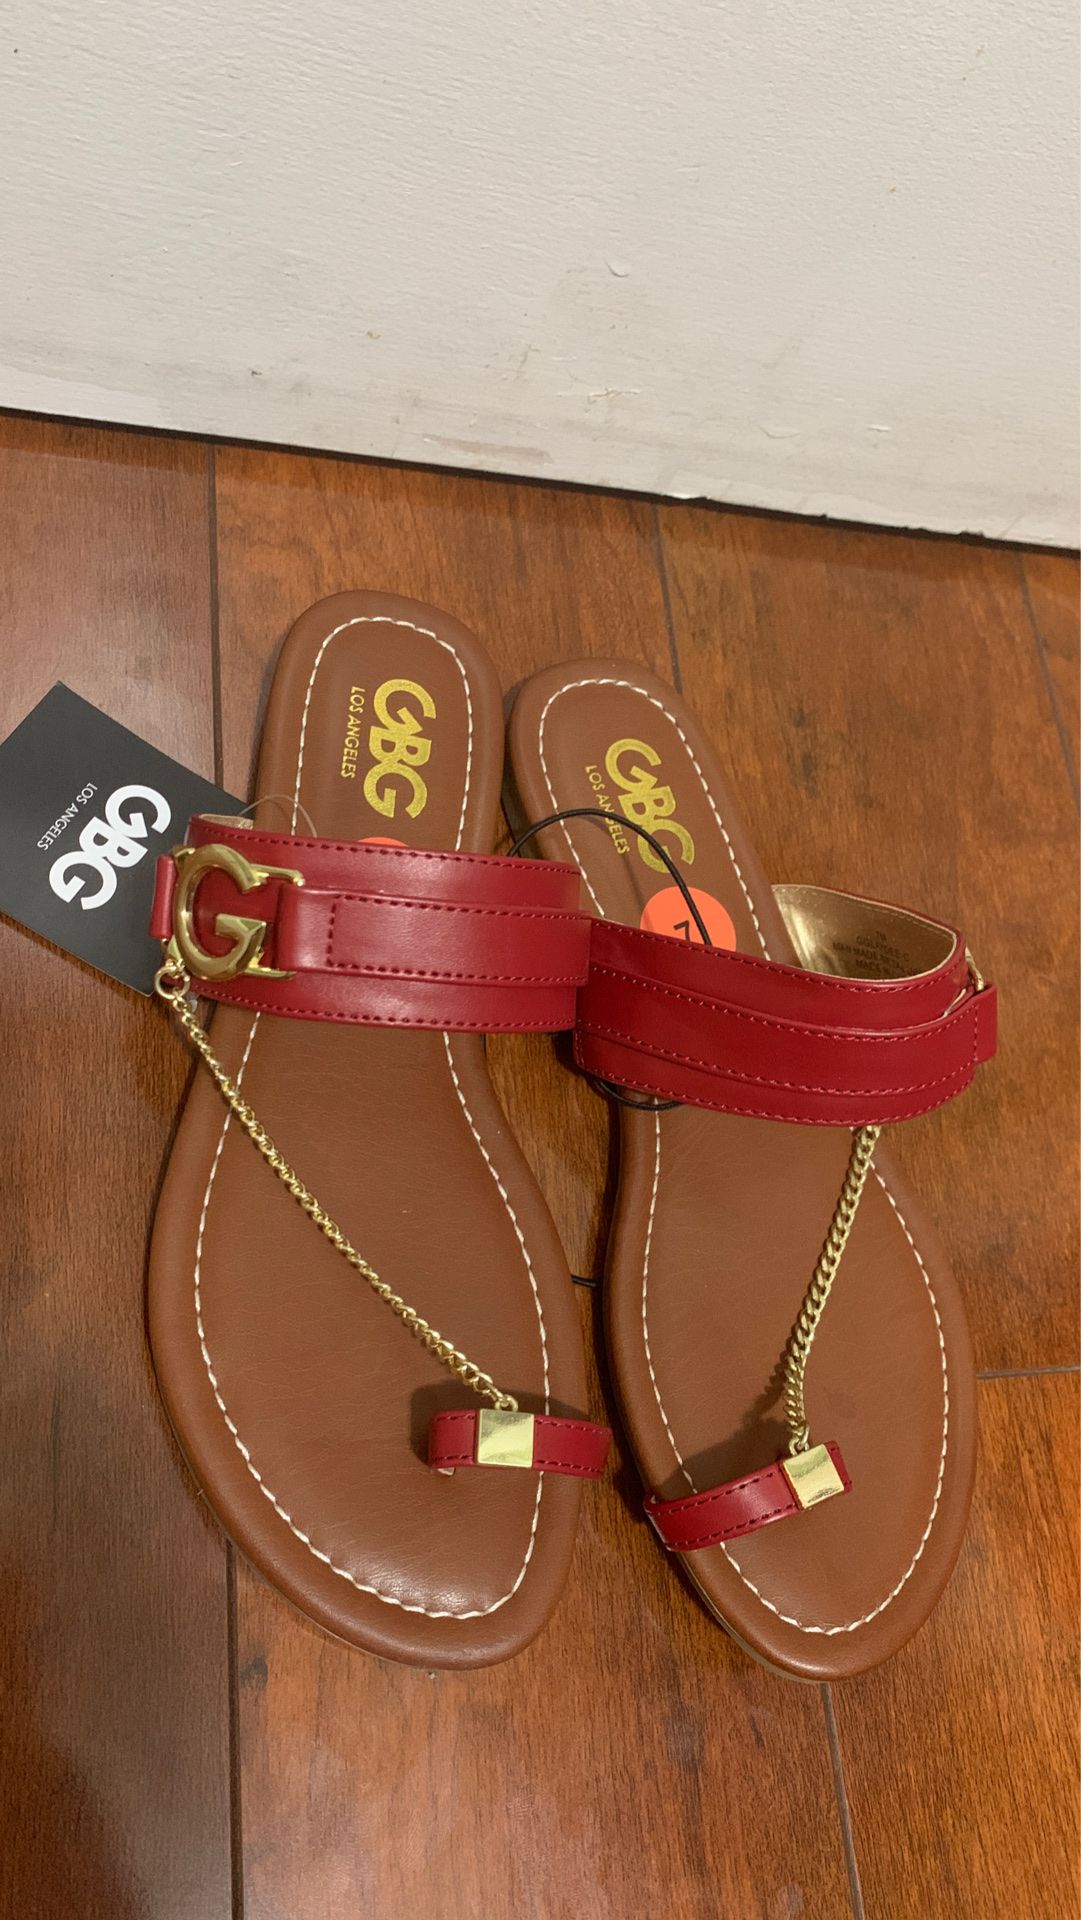 GBG sandals 👡 size 7